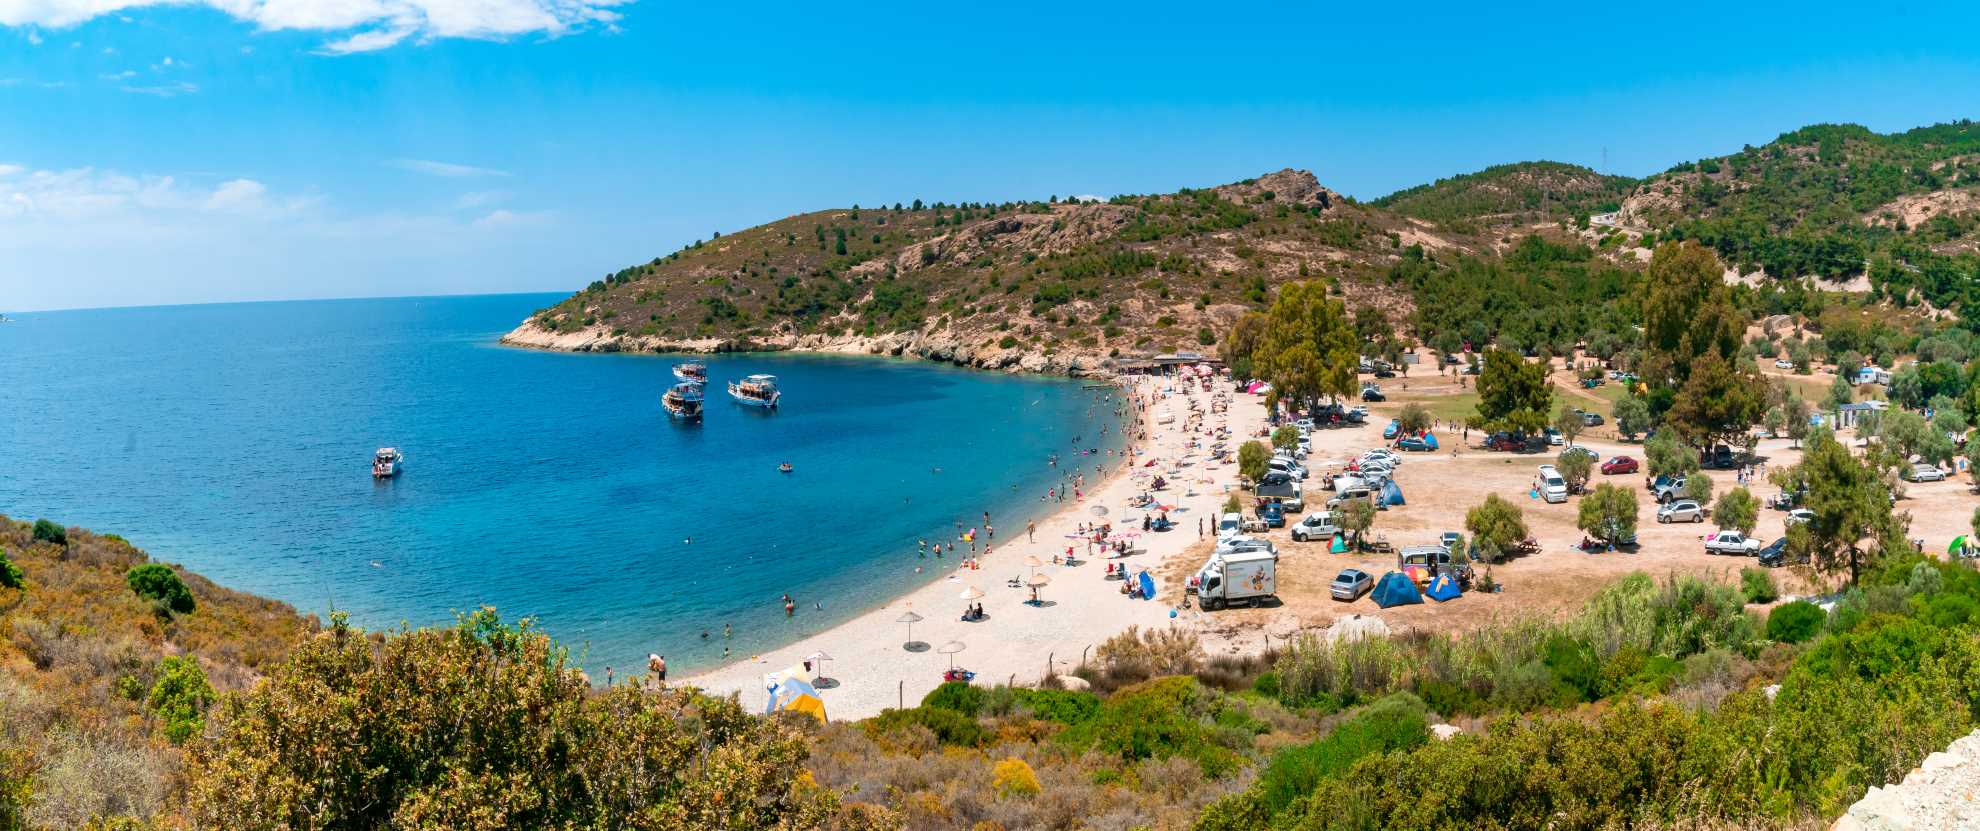 Camping on beach in Phocaea, Gulf of İzmir, Turkey - Campsites in Turkey